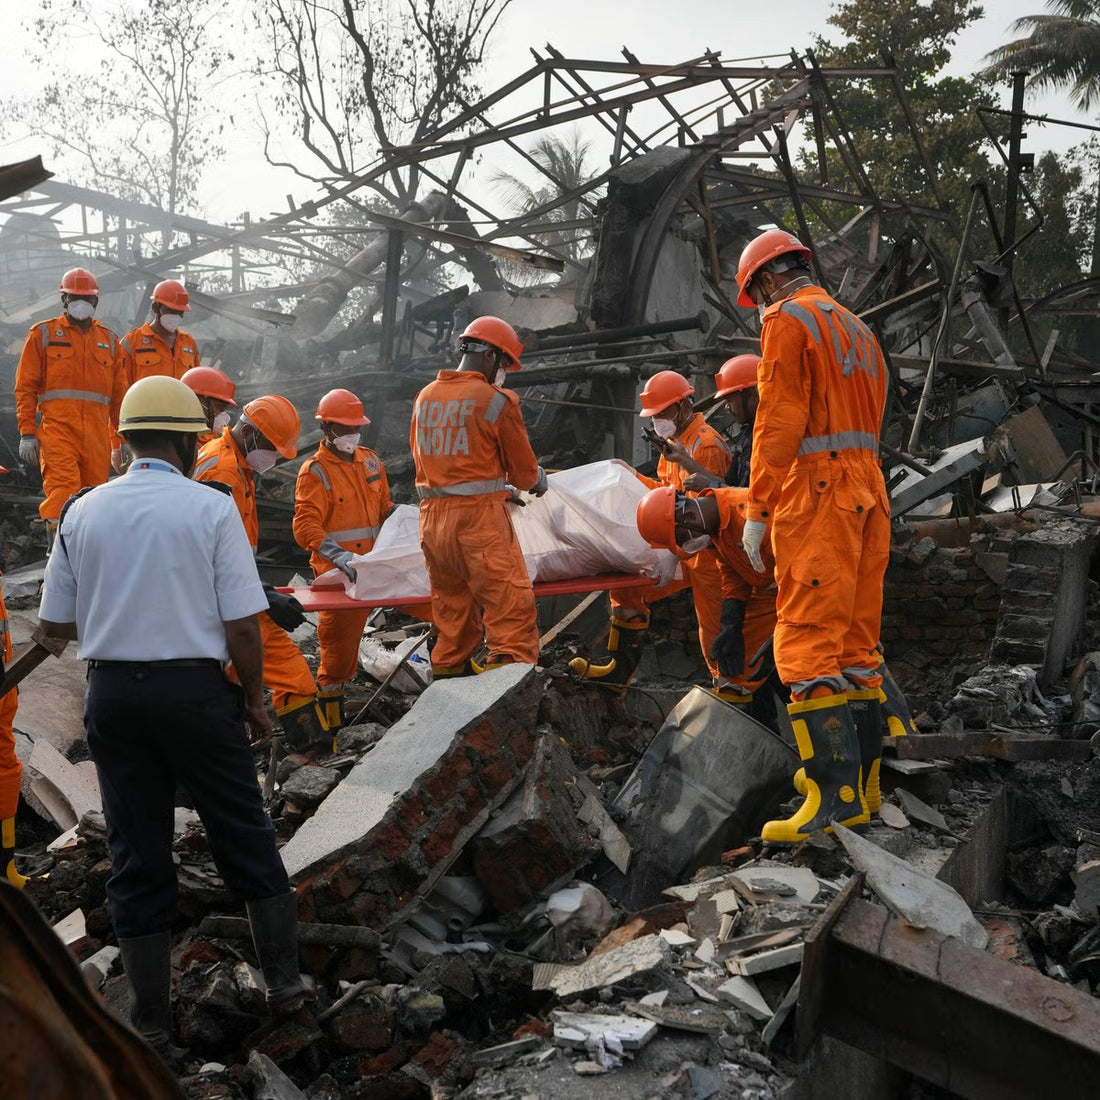 Dombivli Fire Tragedy: A Stark Reminder of Workplace Safety